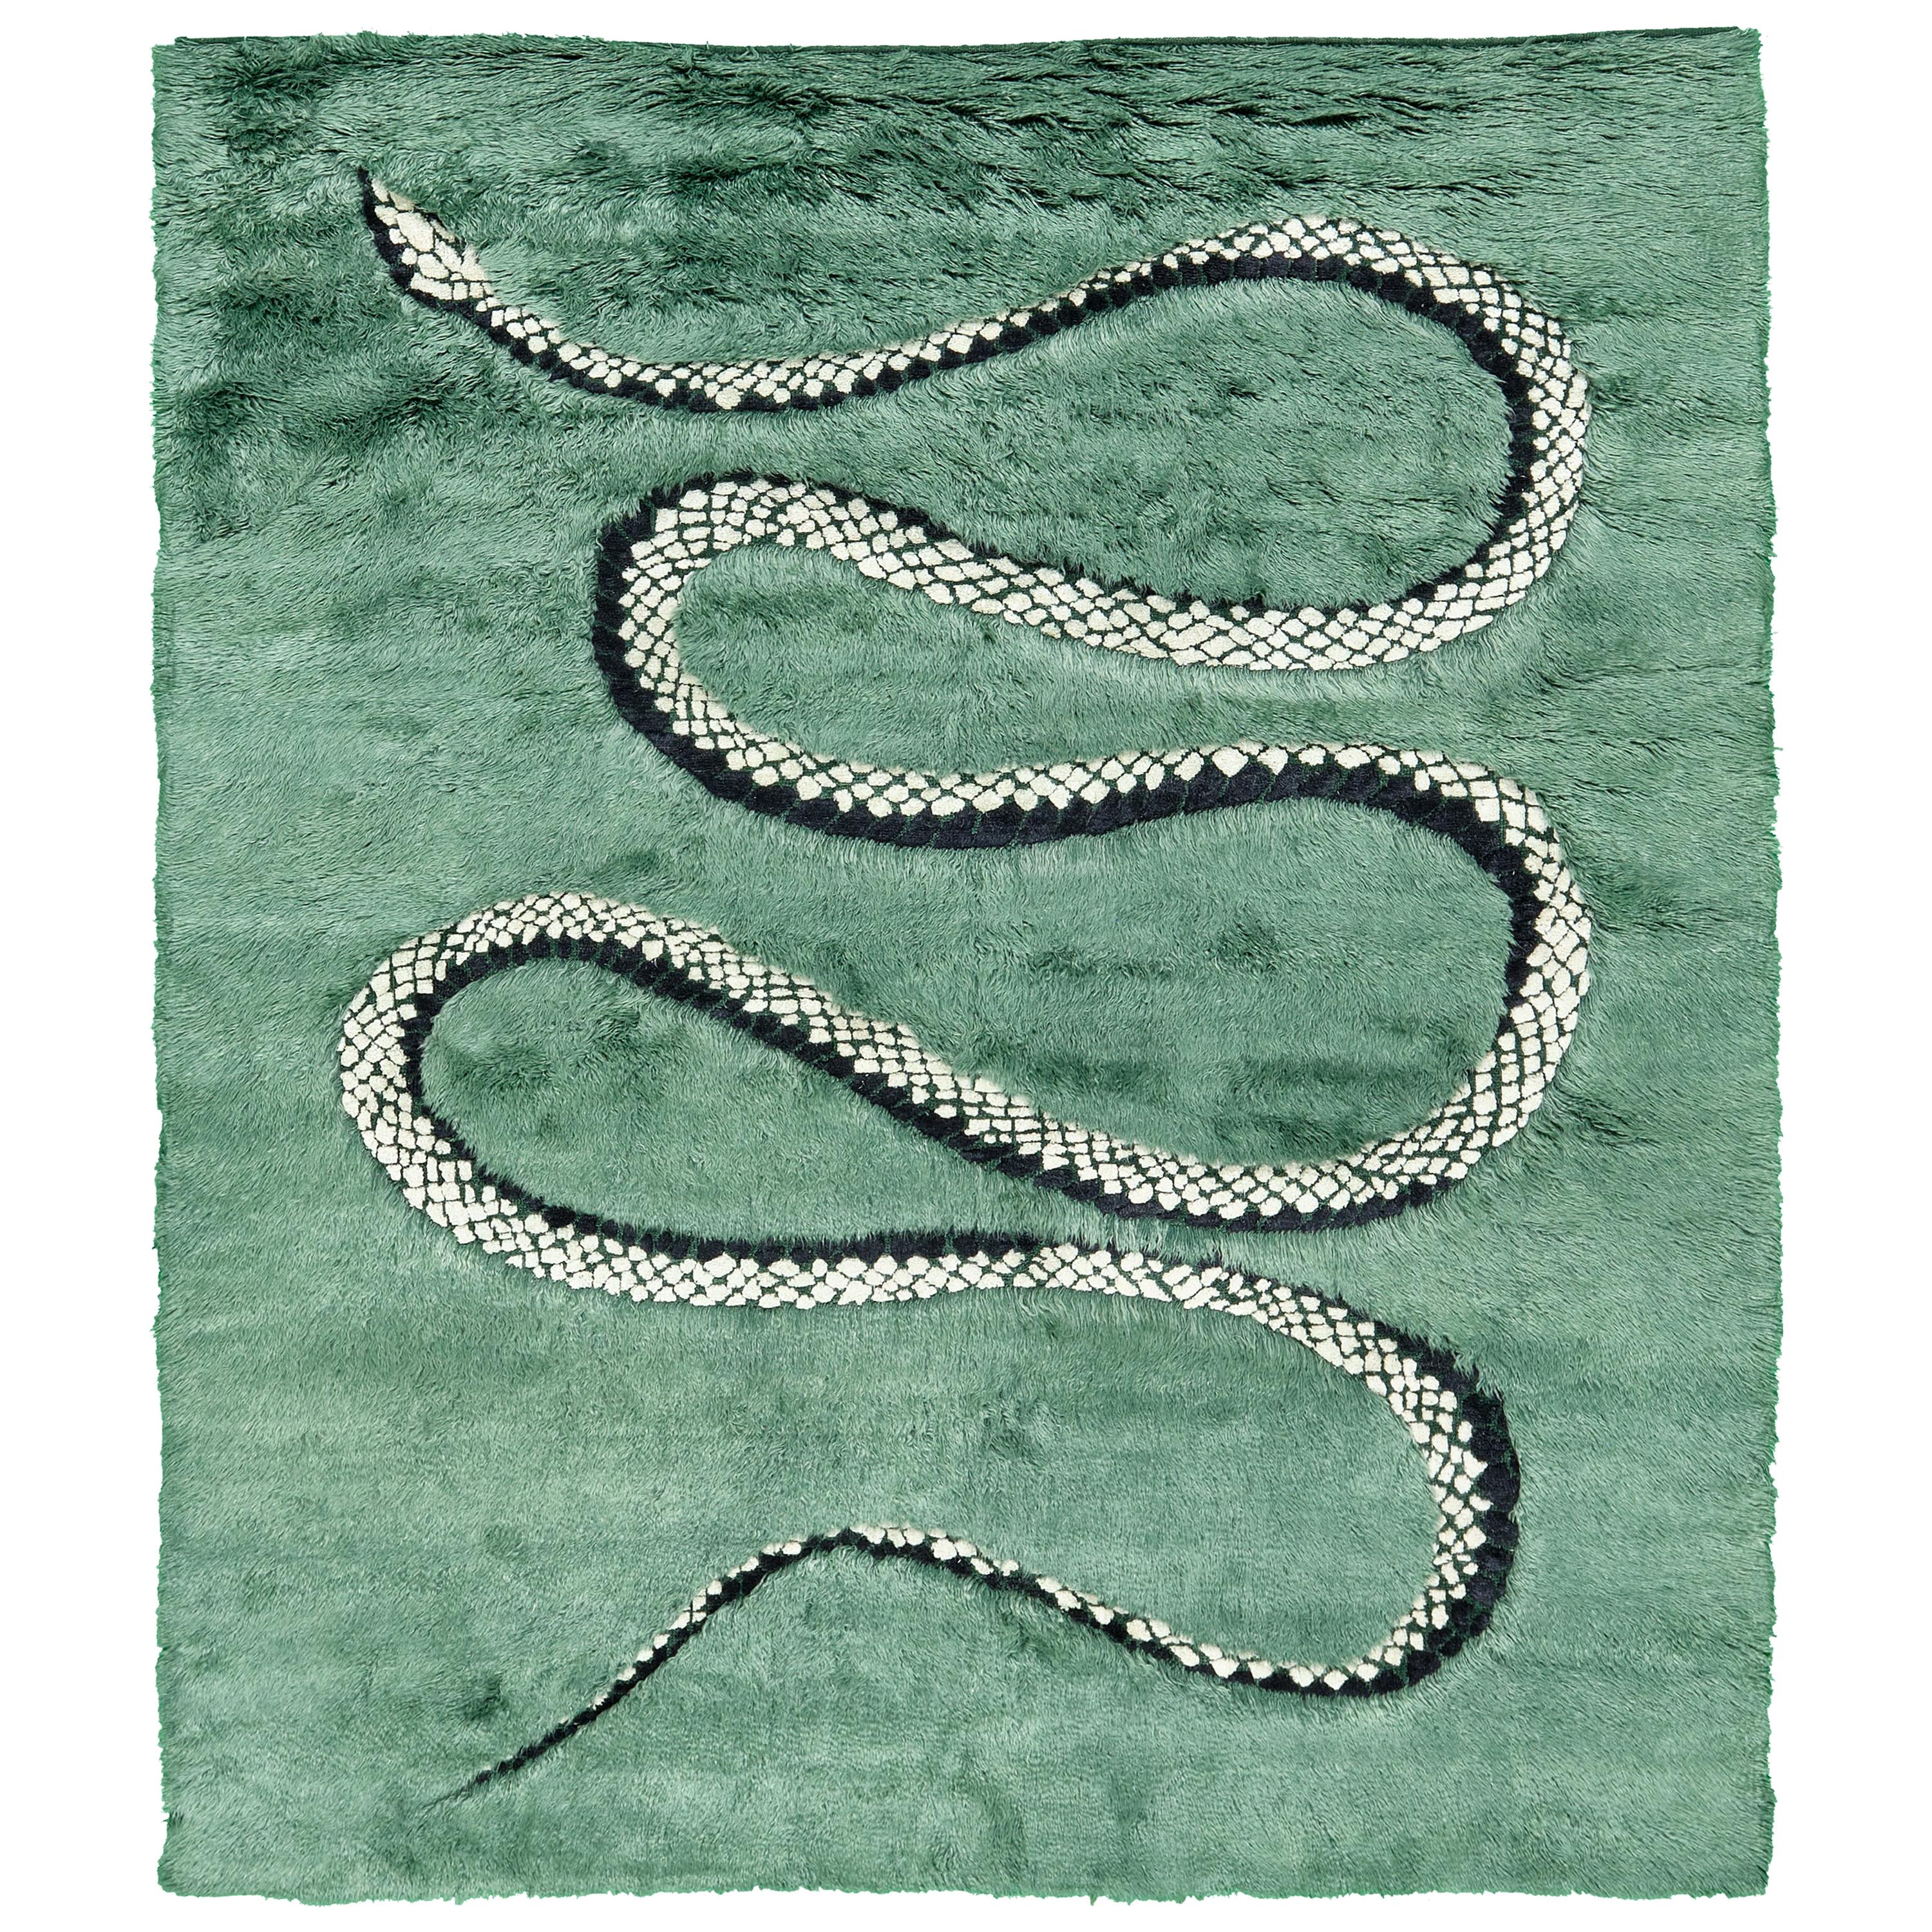 Année du serpent, collection Liesel Plambeck par Mehraban